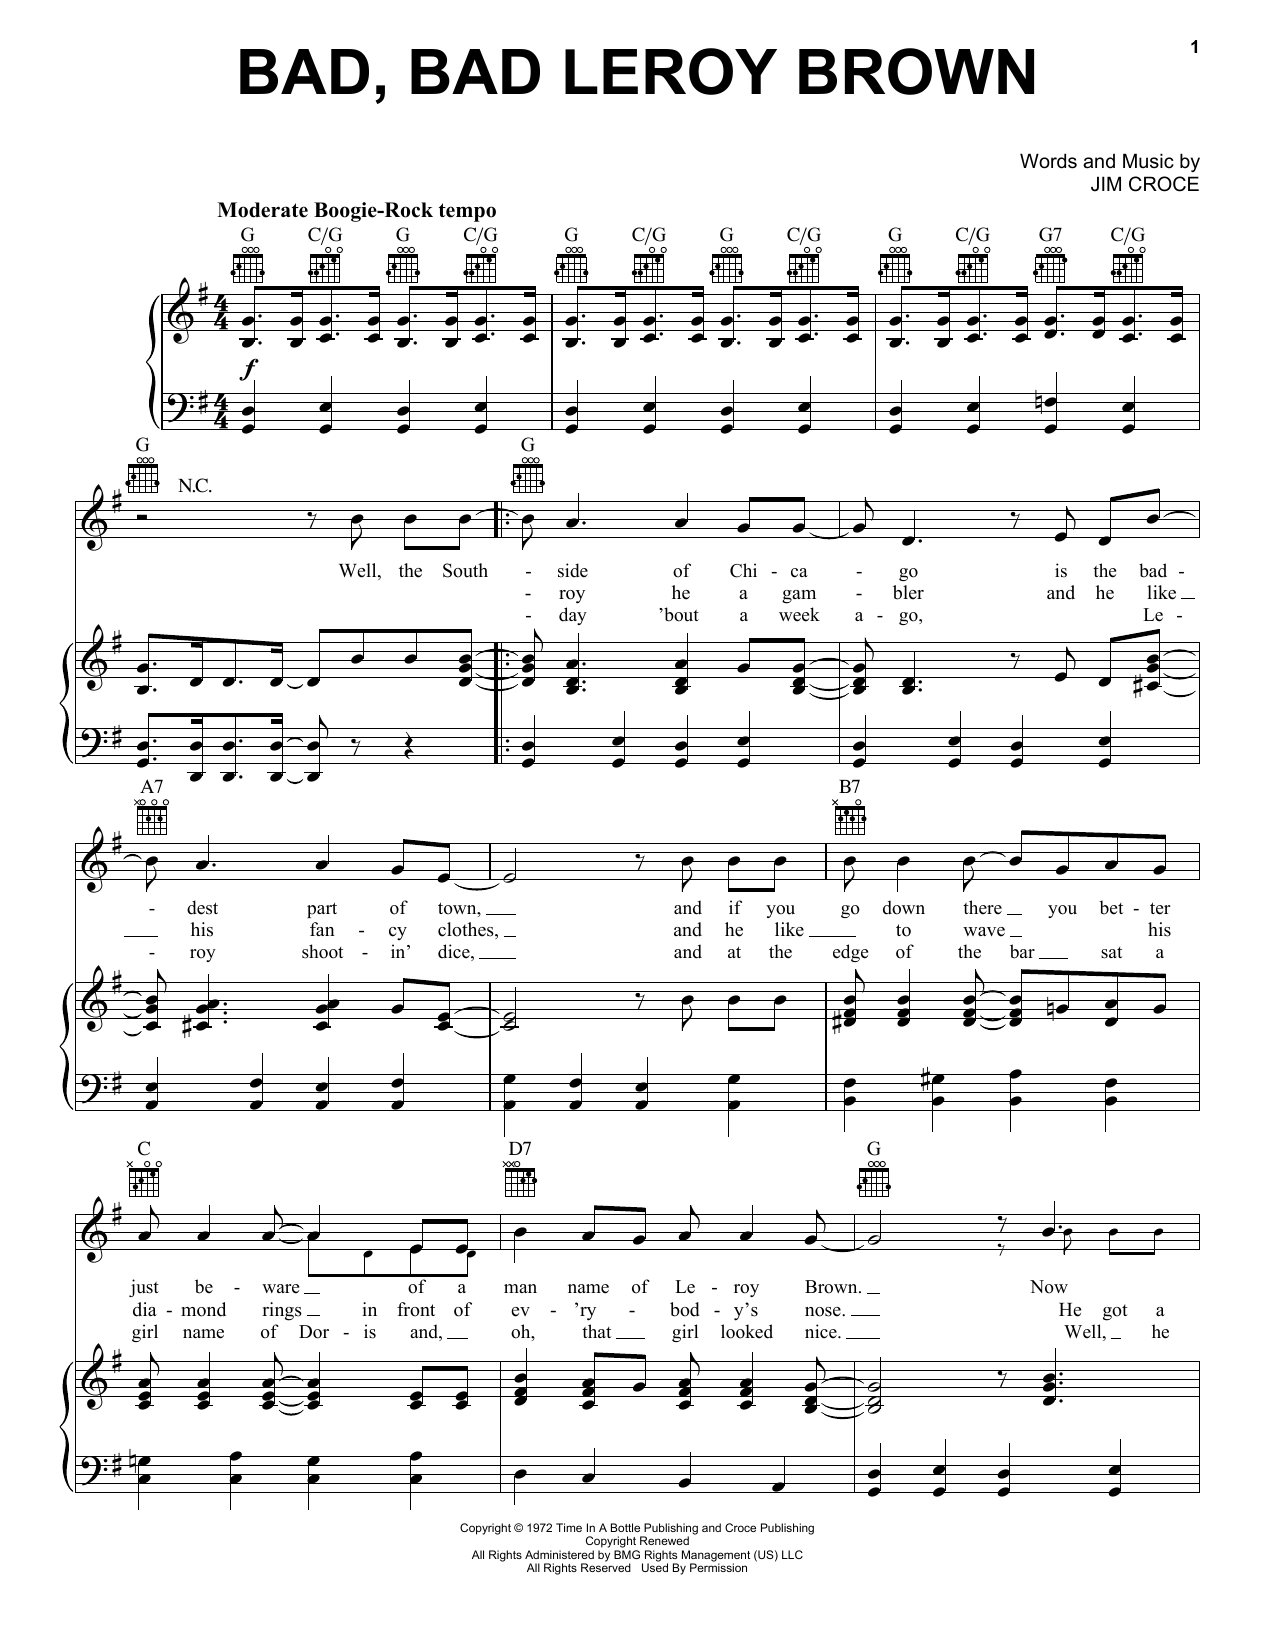 Jim Croce Bad, Bad Leroy Brown Sheet Music Notes & Chords for Melody Line, Lyrics & Chords - Download or Print PDF